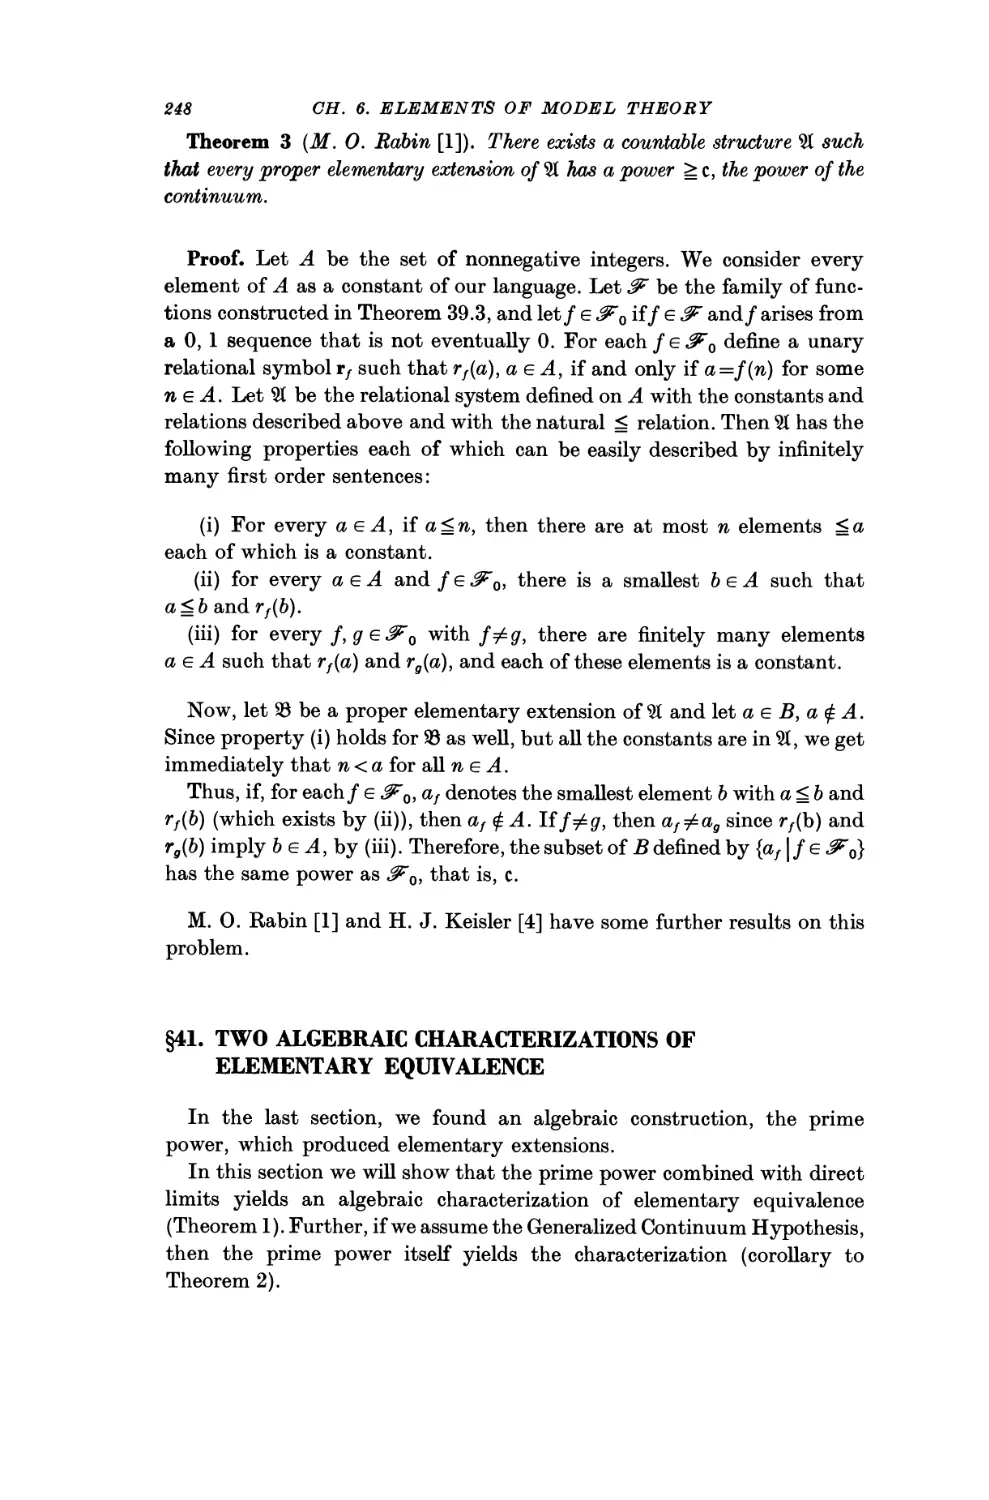 §41. Two Algebraic Characterizations of Elementary Equivalence